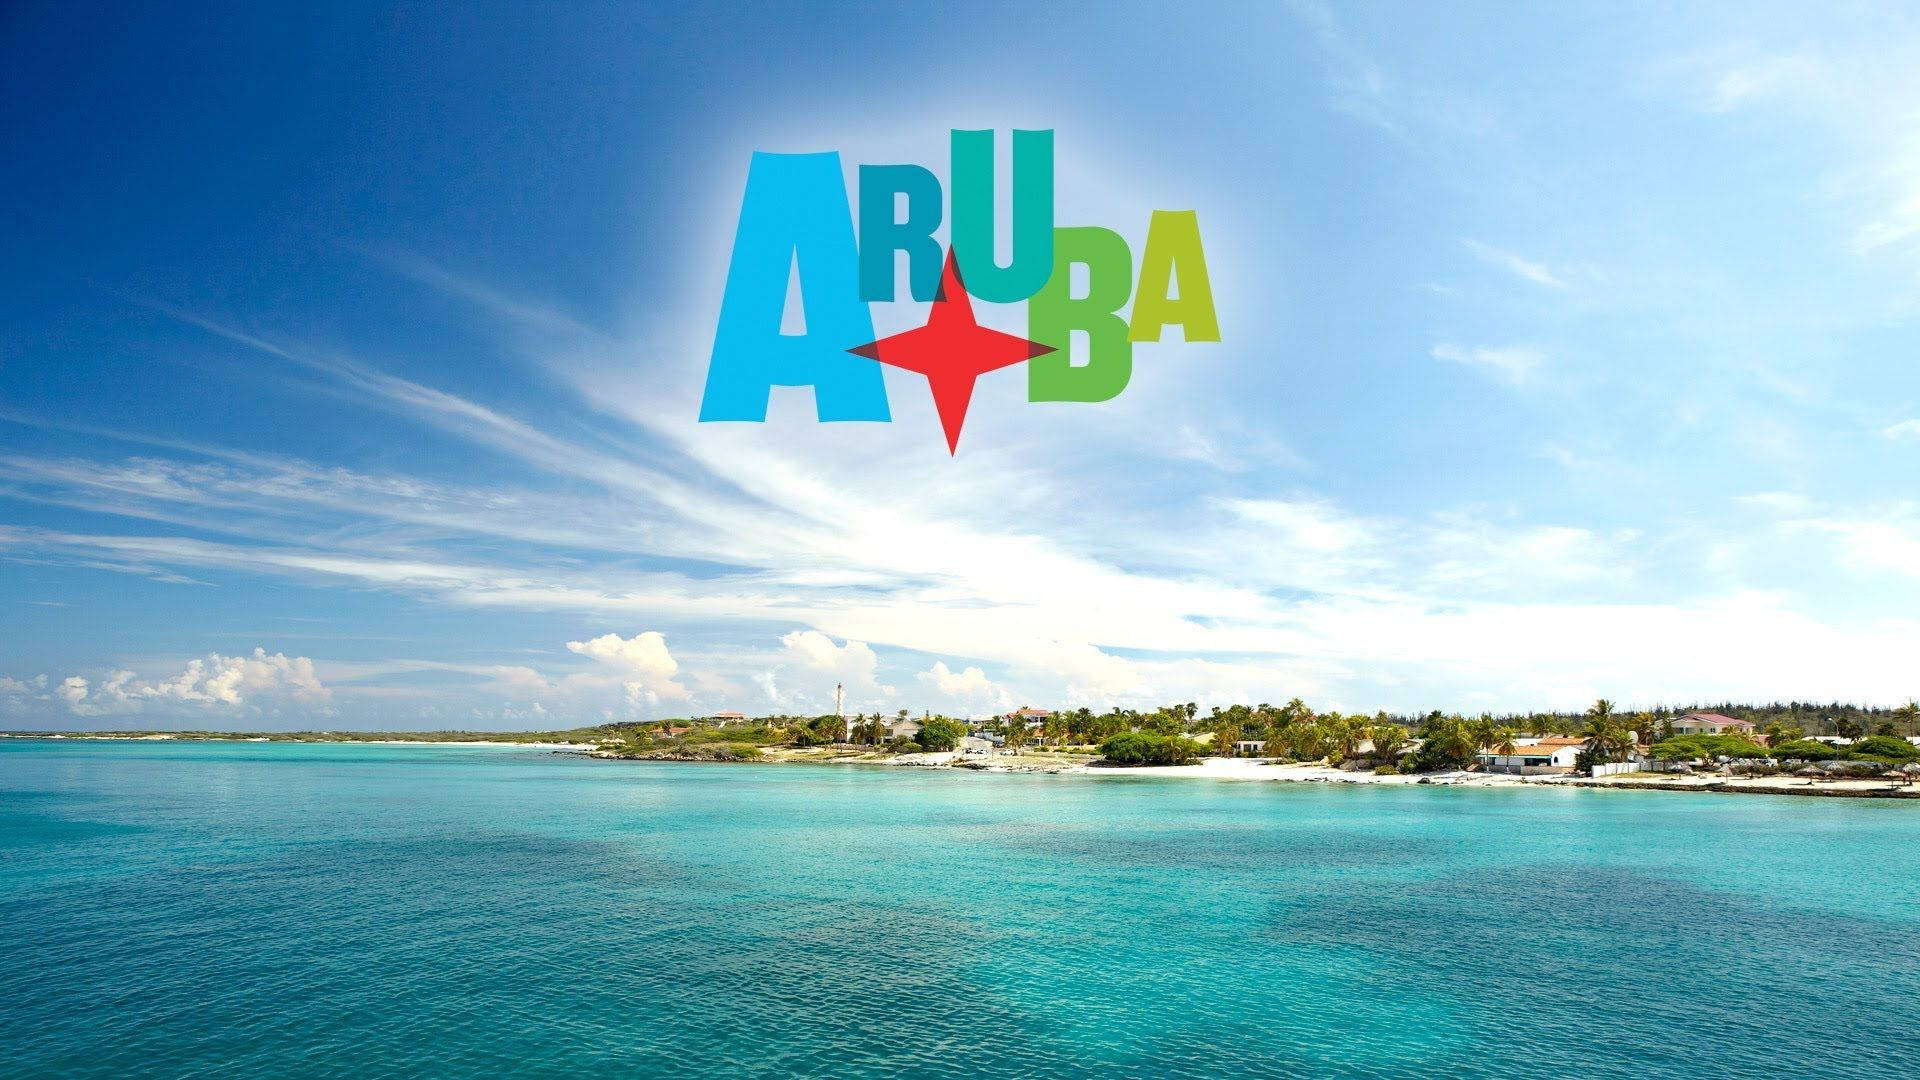 Fondods De Aruba